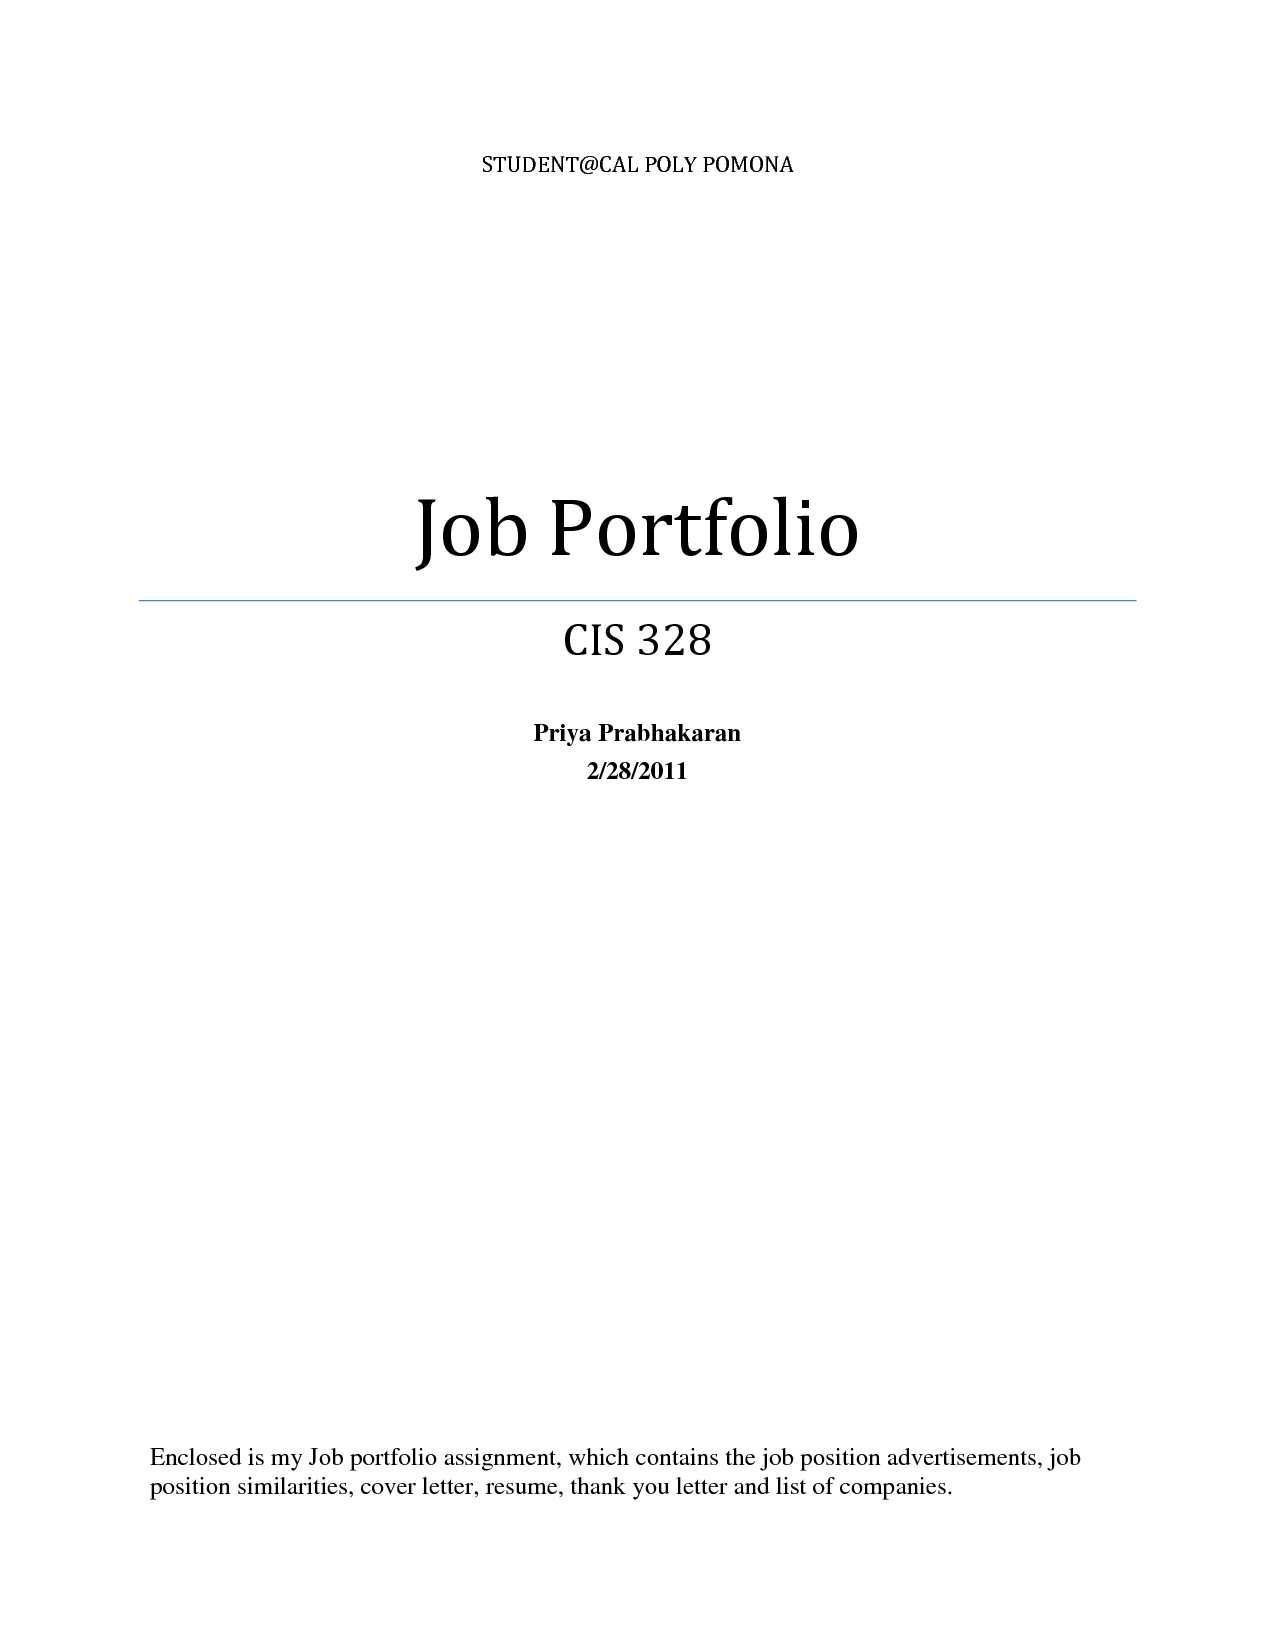 Job Portfolio Cover Page